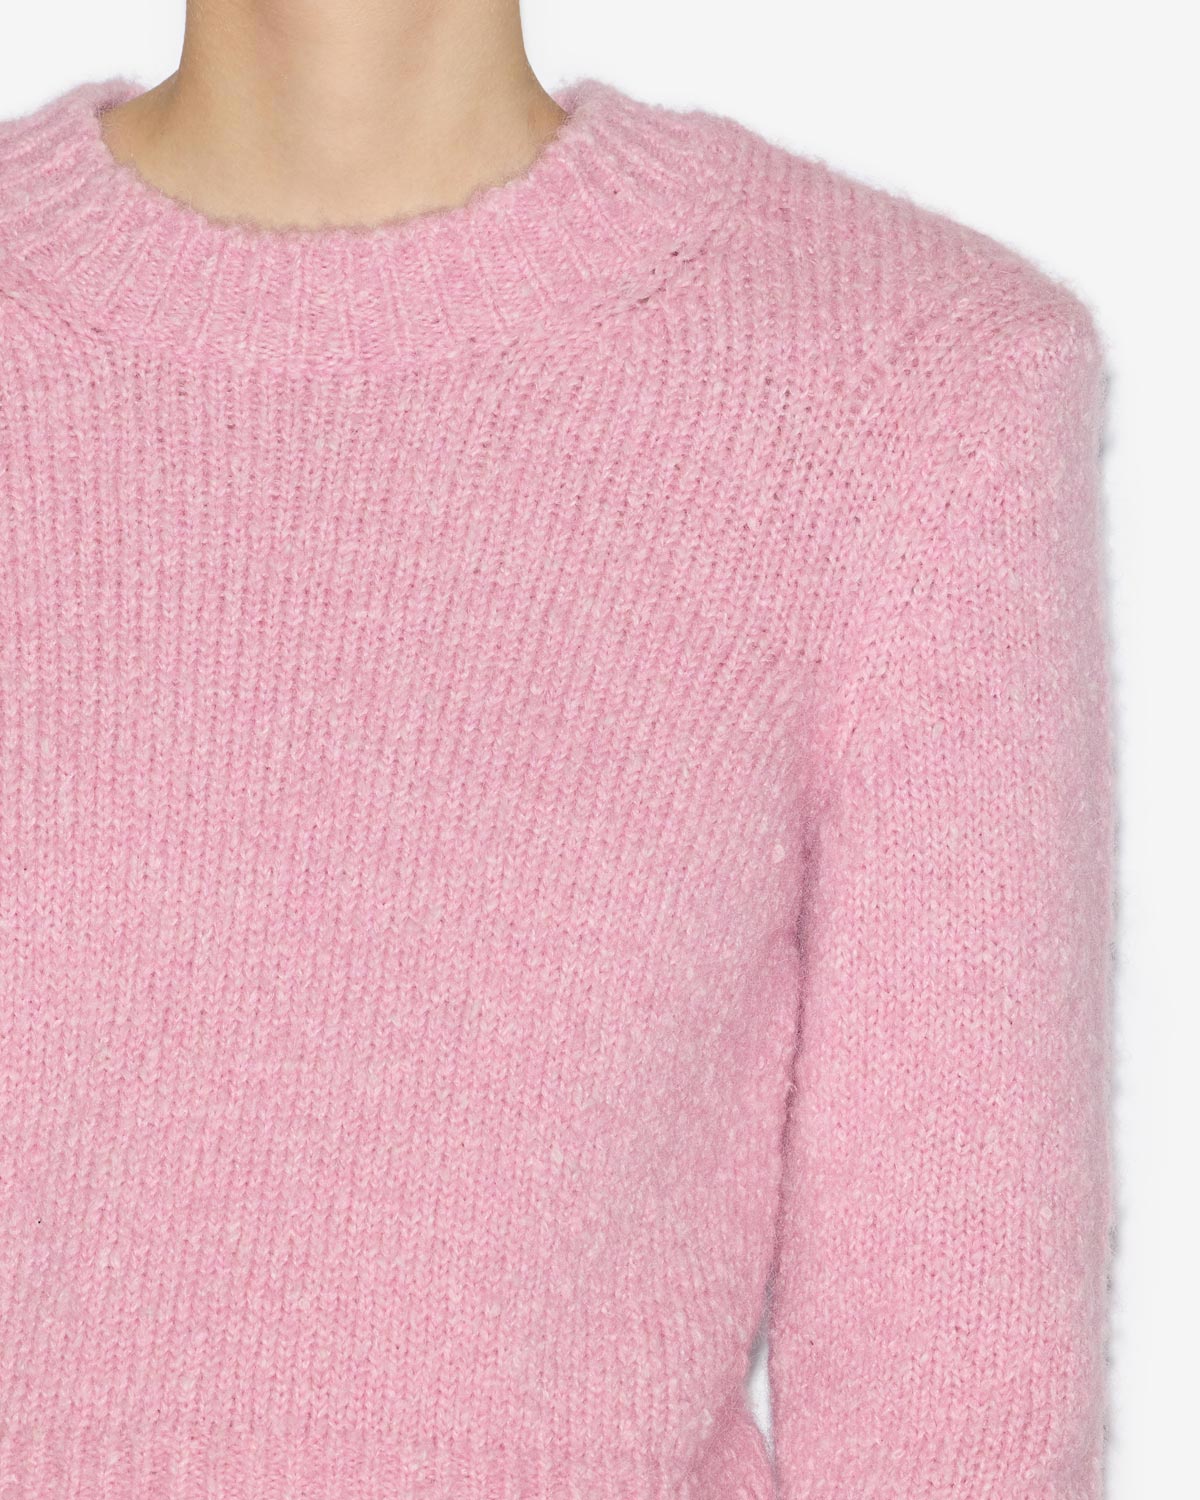 Kalo sweater Woman Light pink 2